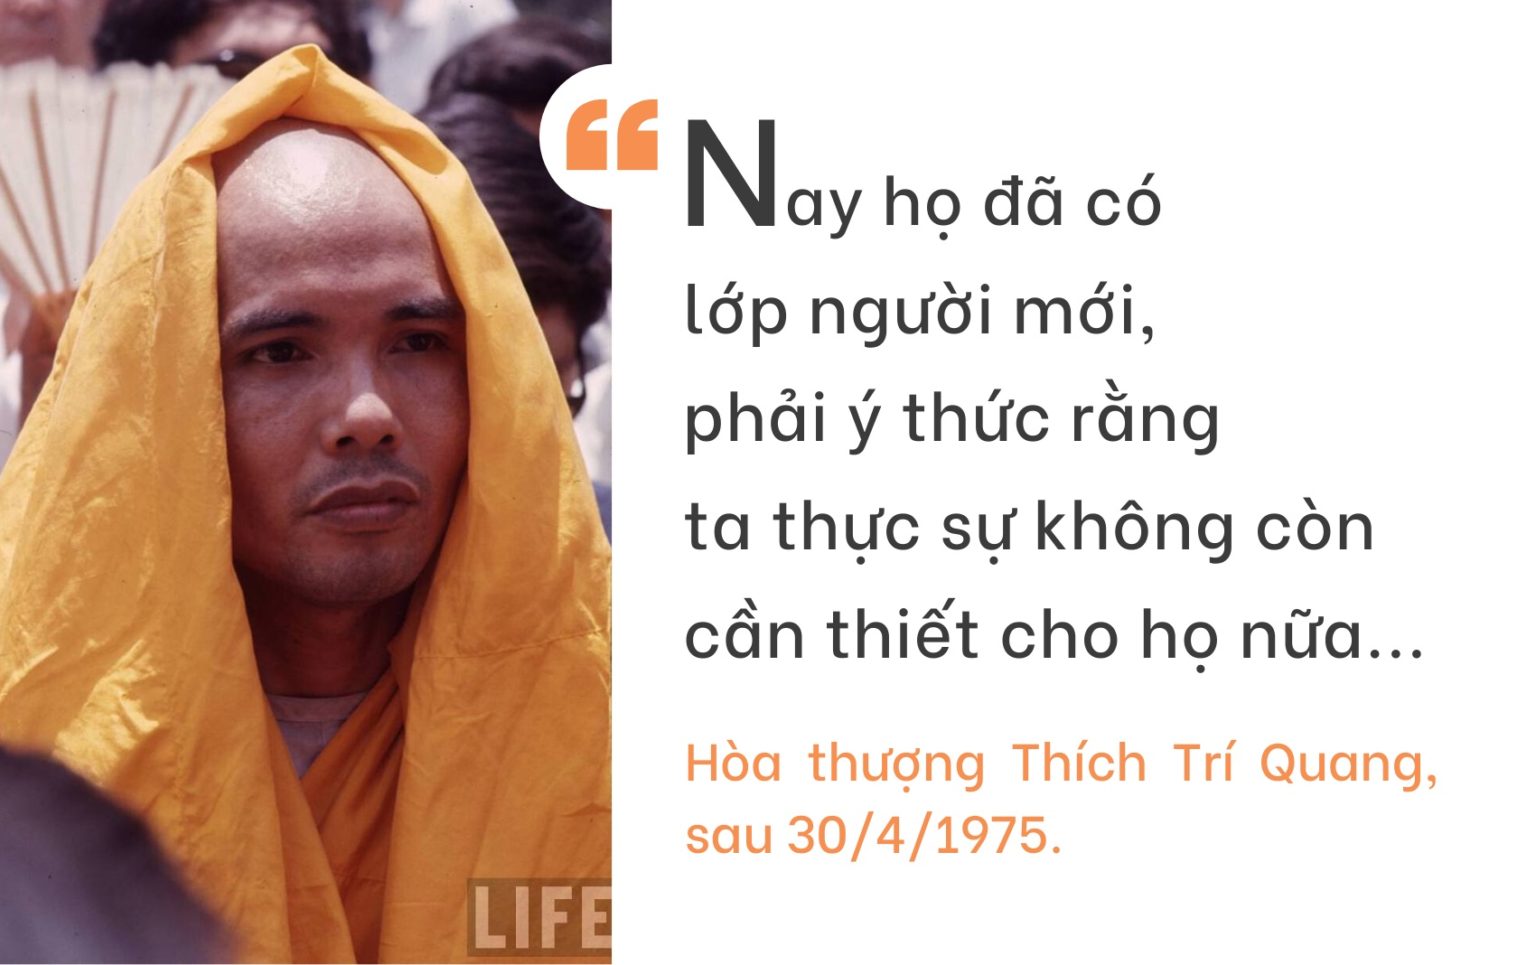 Thich Tri Quang phat bieu sau ngay 30 4 1975 compressed 1 1536x965